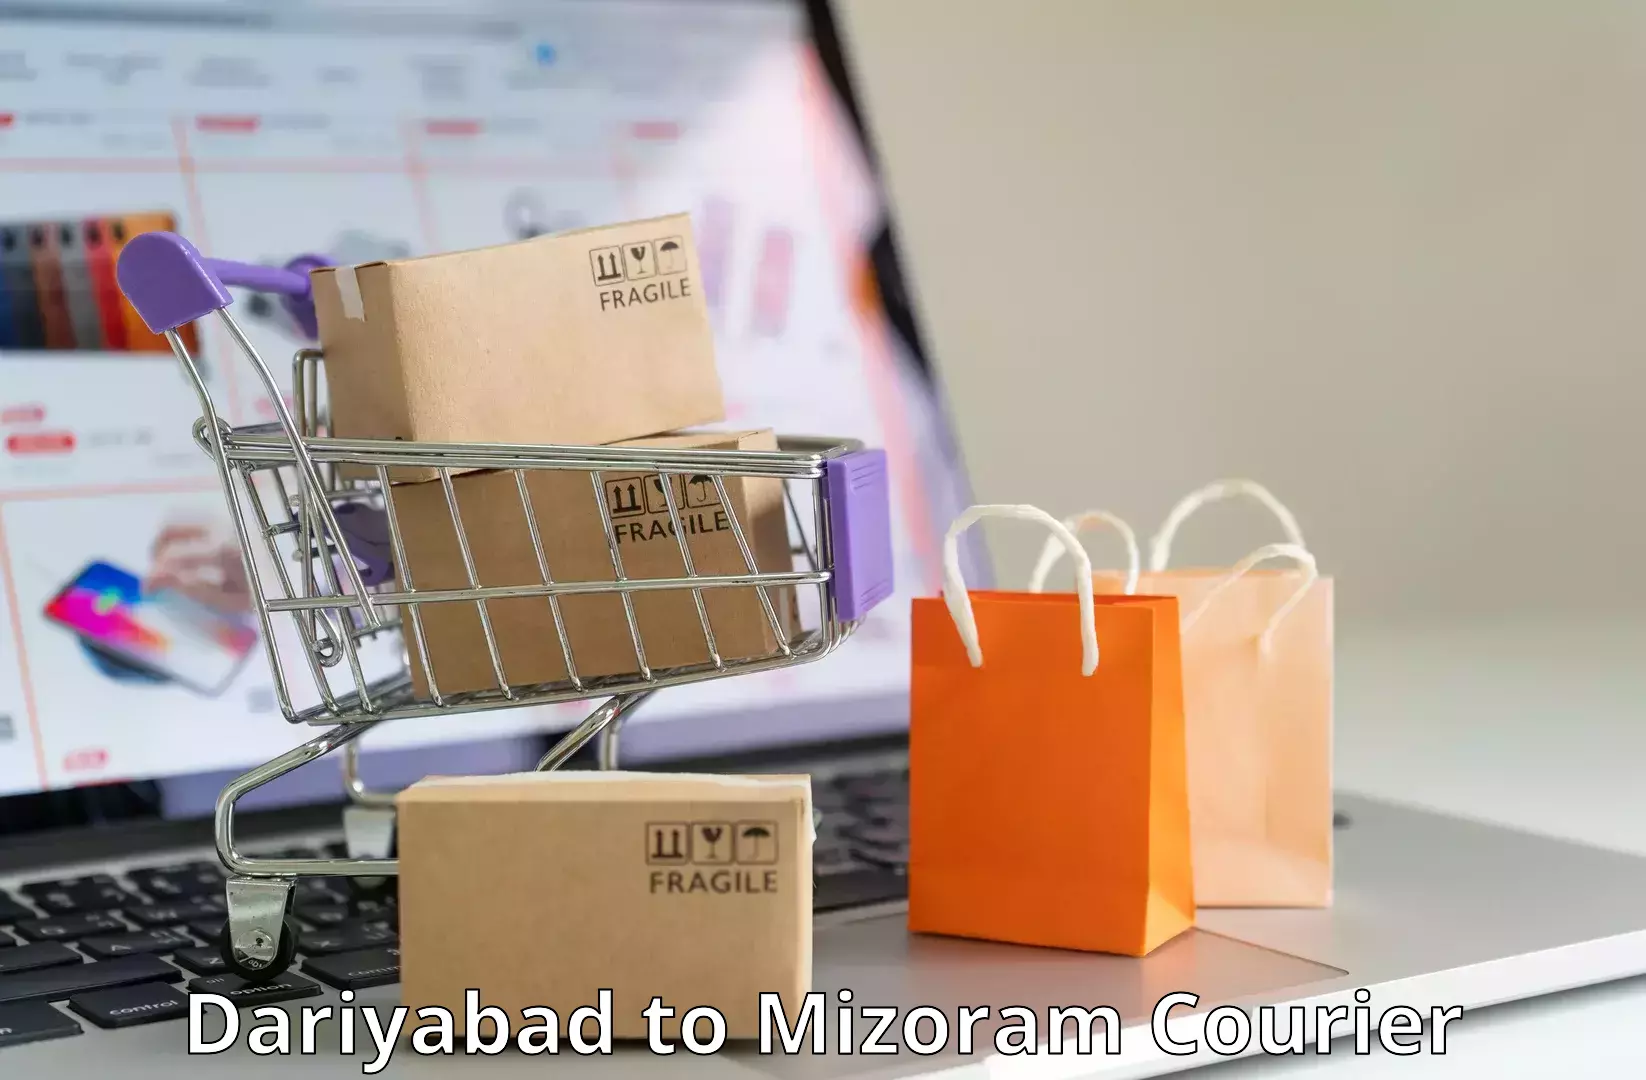 Online package tracking Dariyabad to Mizoram